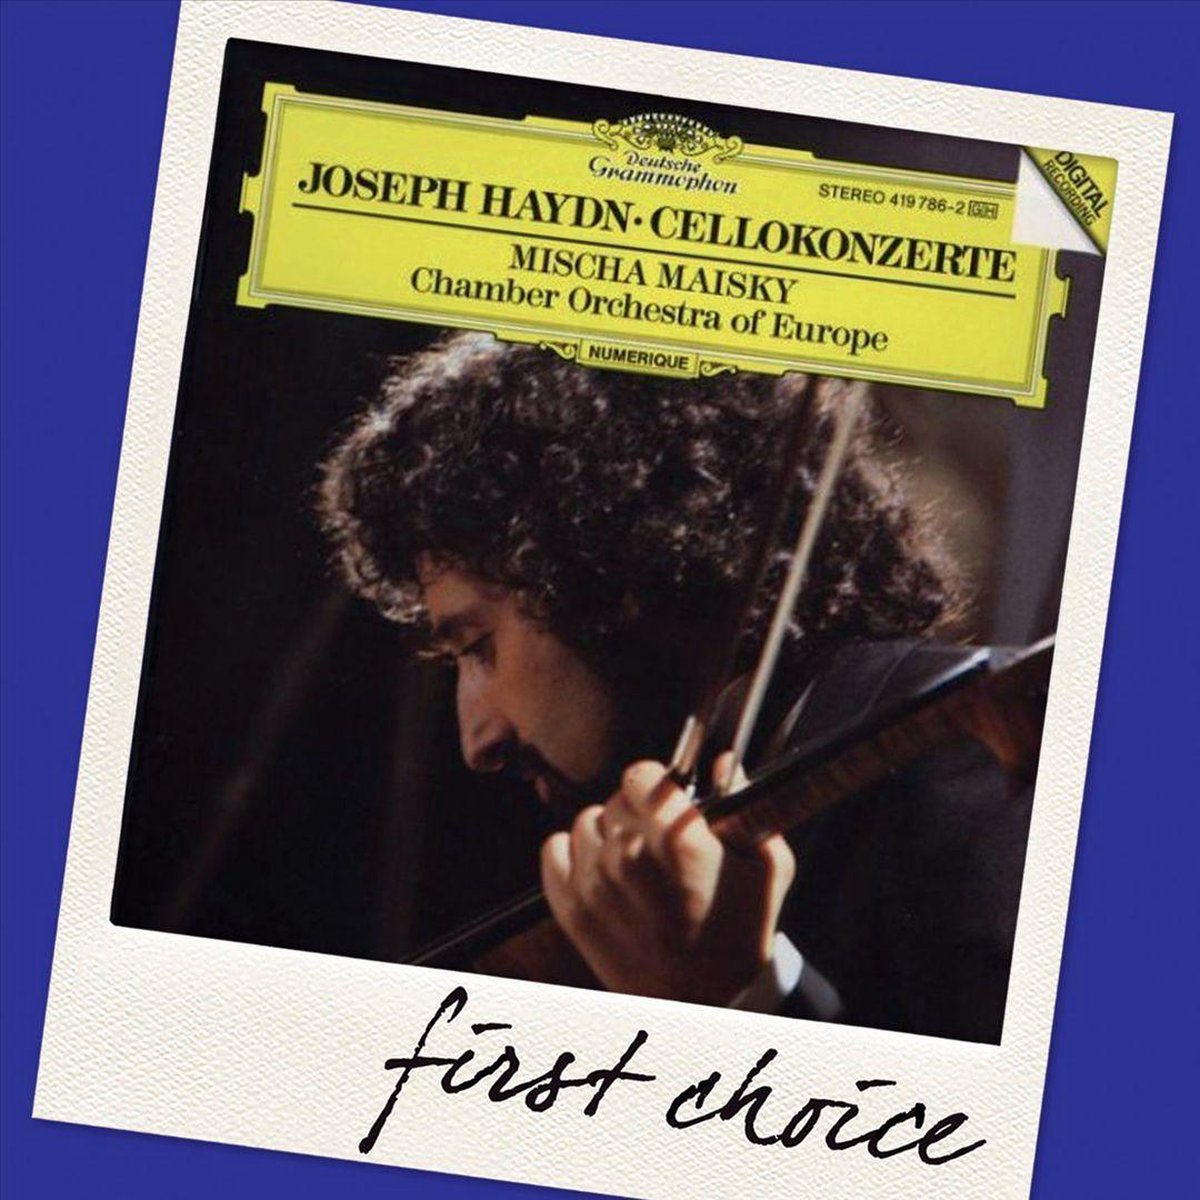 Joseph Haydn: Cellokonzerte - various artists